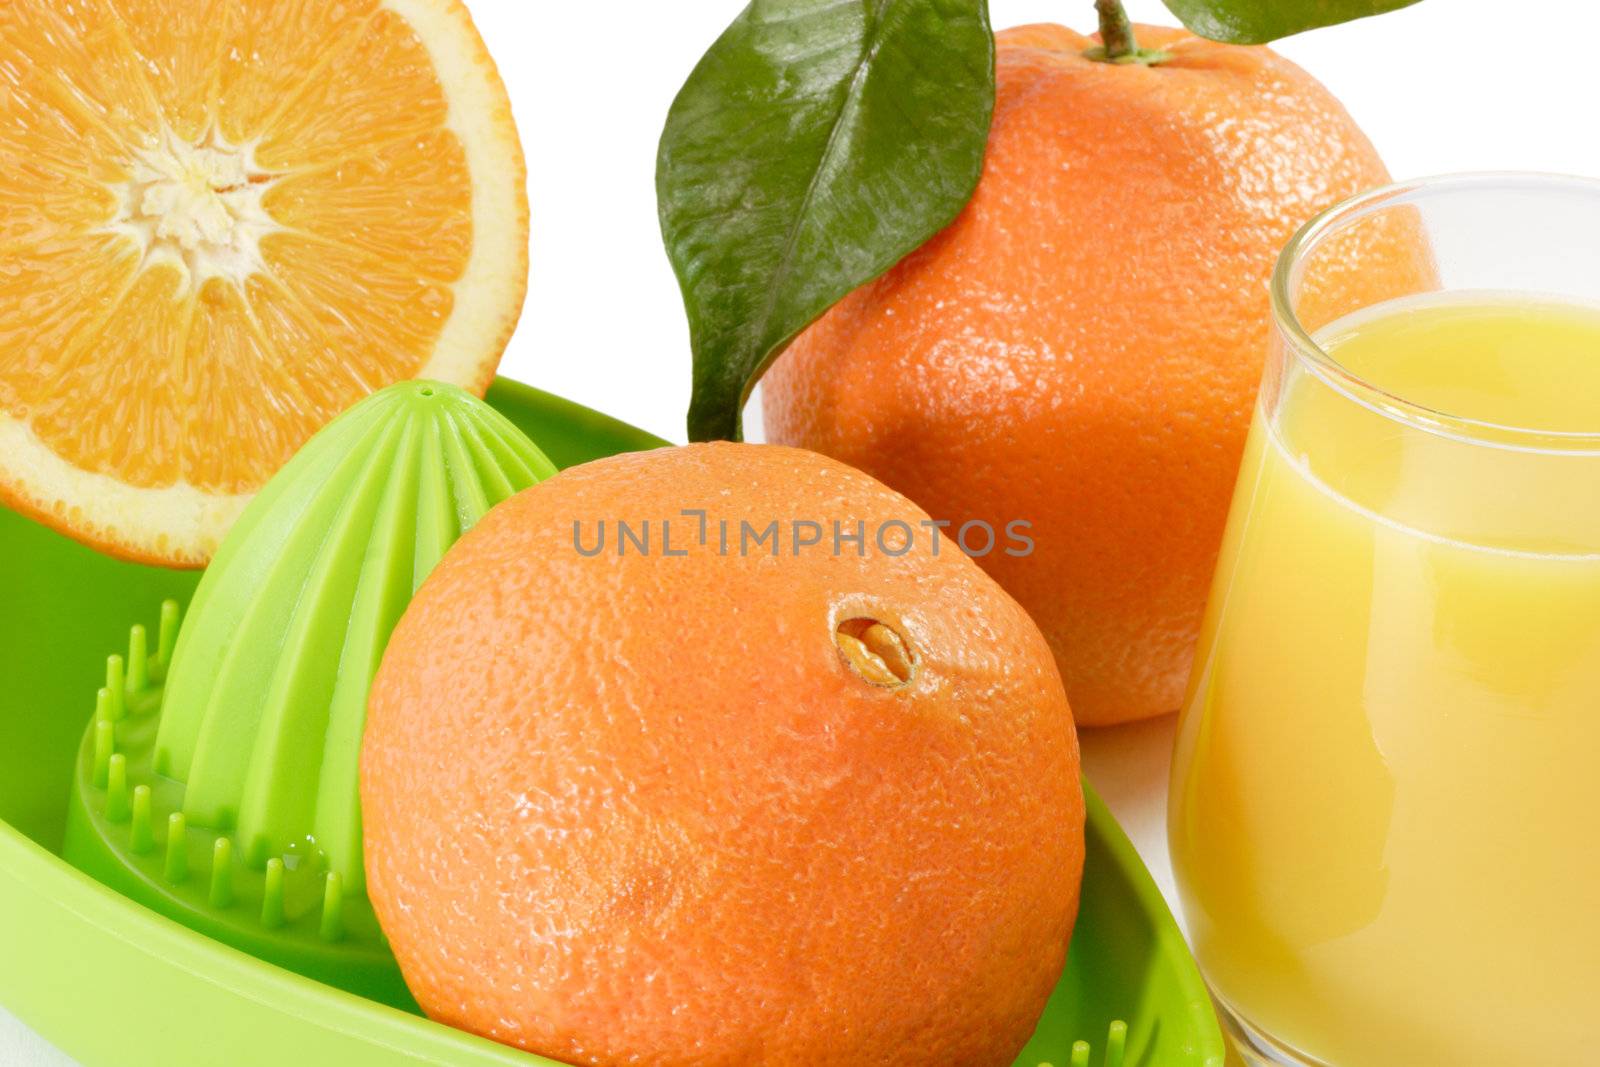 Fresh Oranges and Orange Juice with green juicer